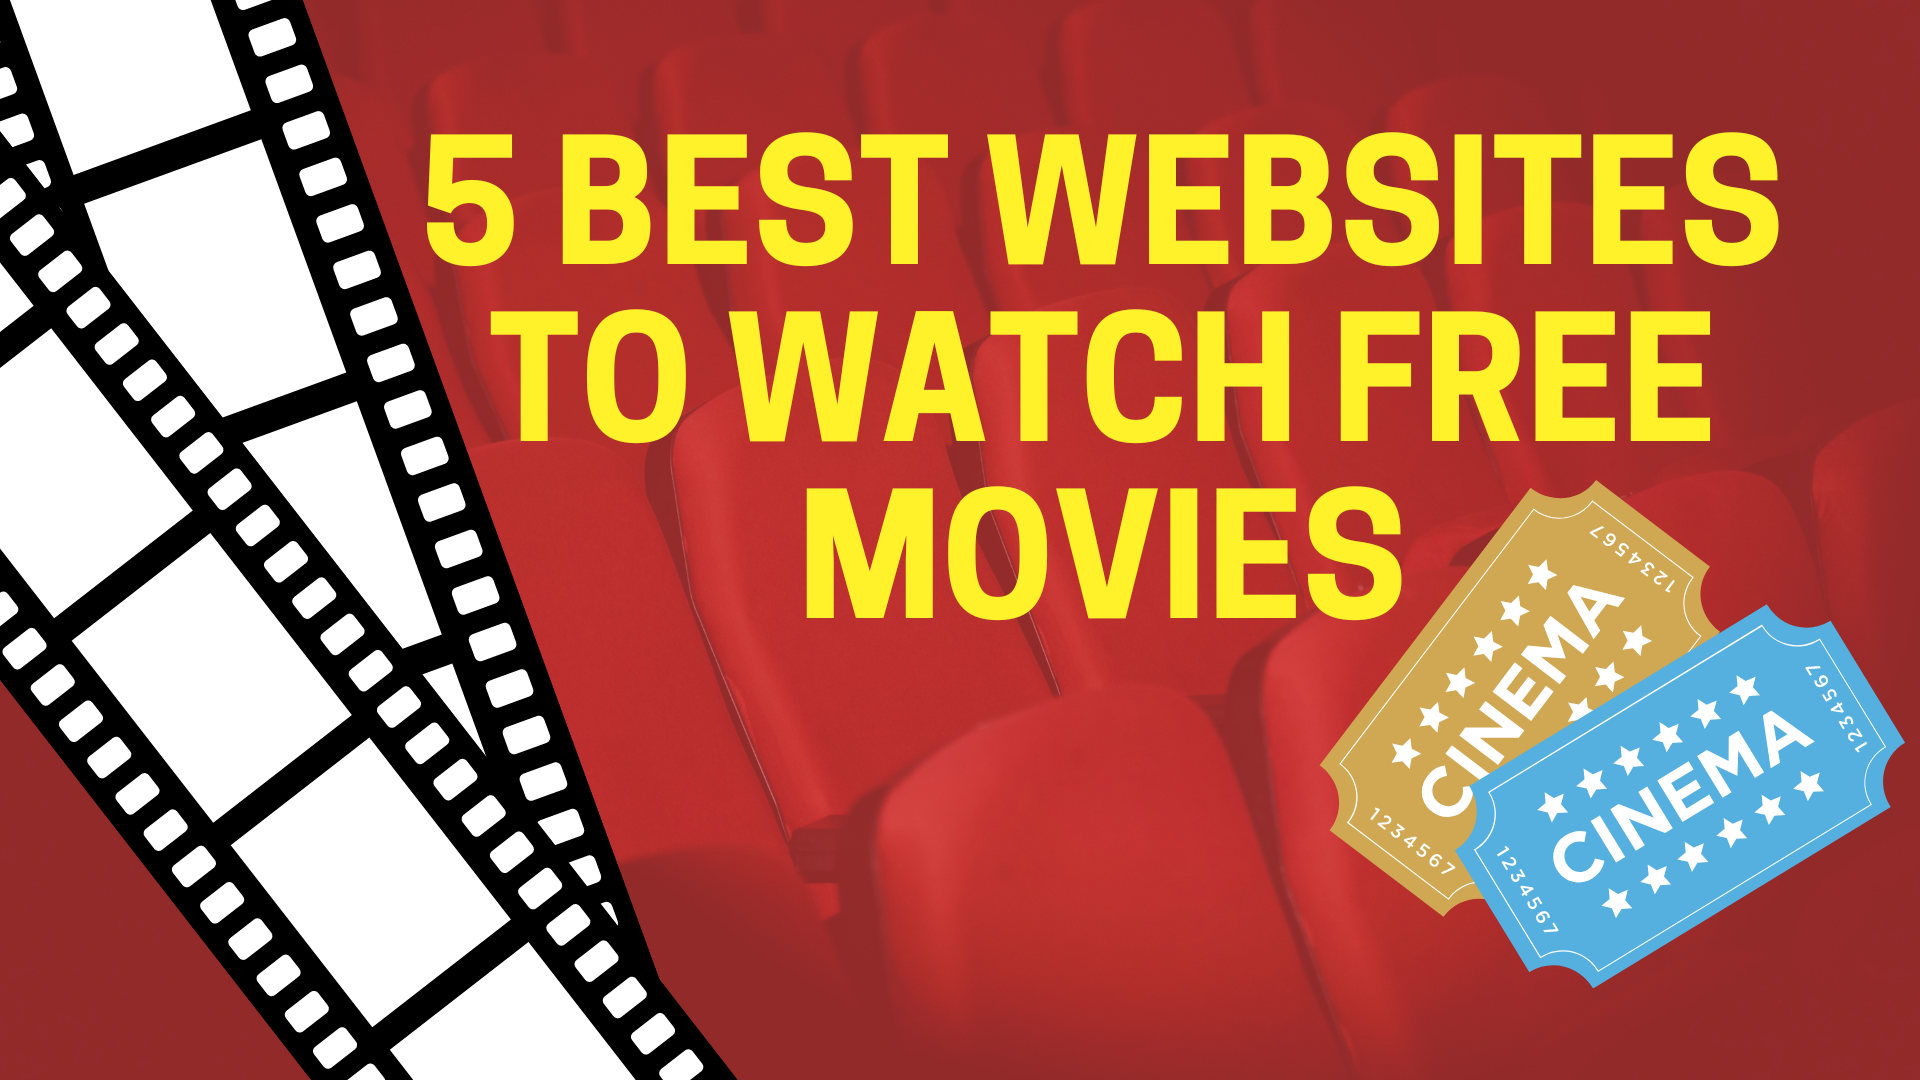 5 BEST WEBSITES TO WATCH FREE MOVIES